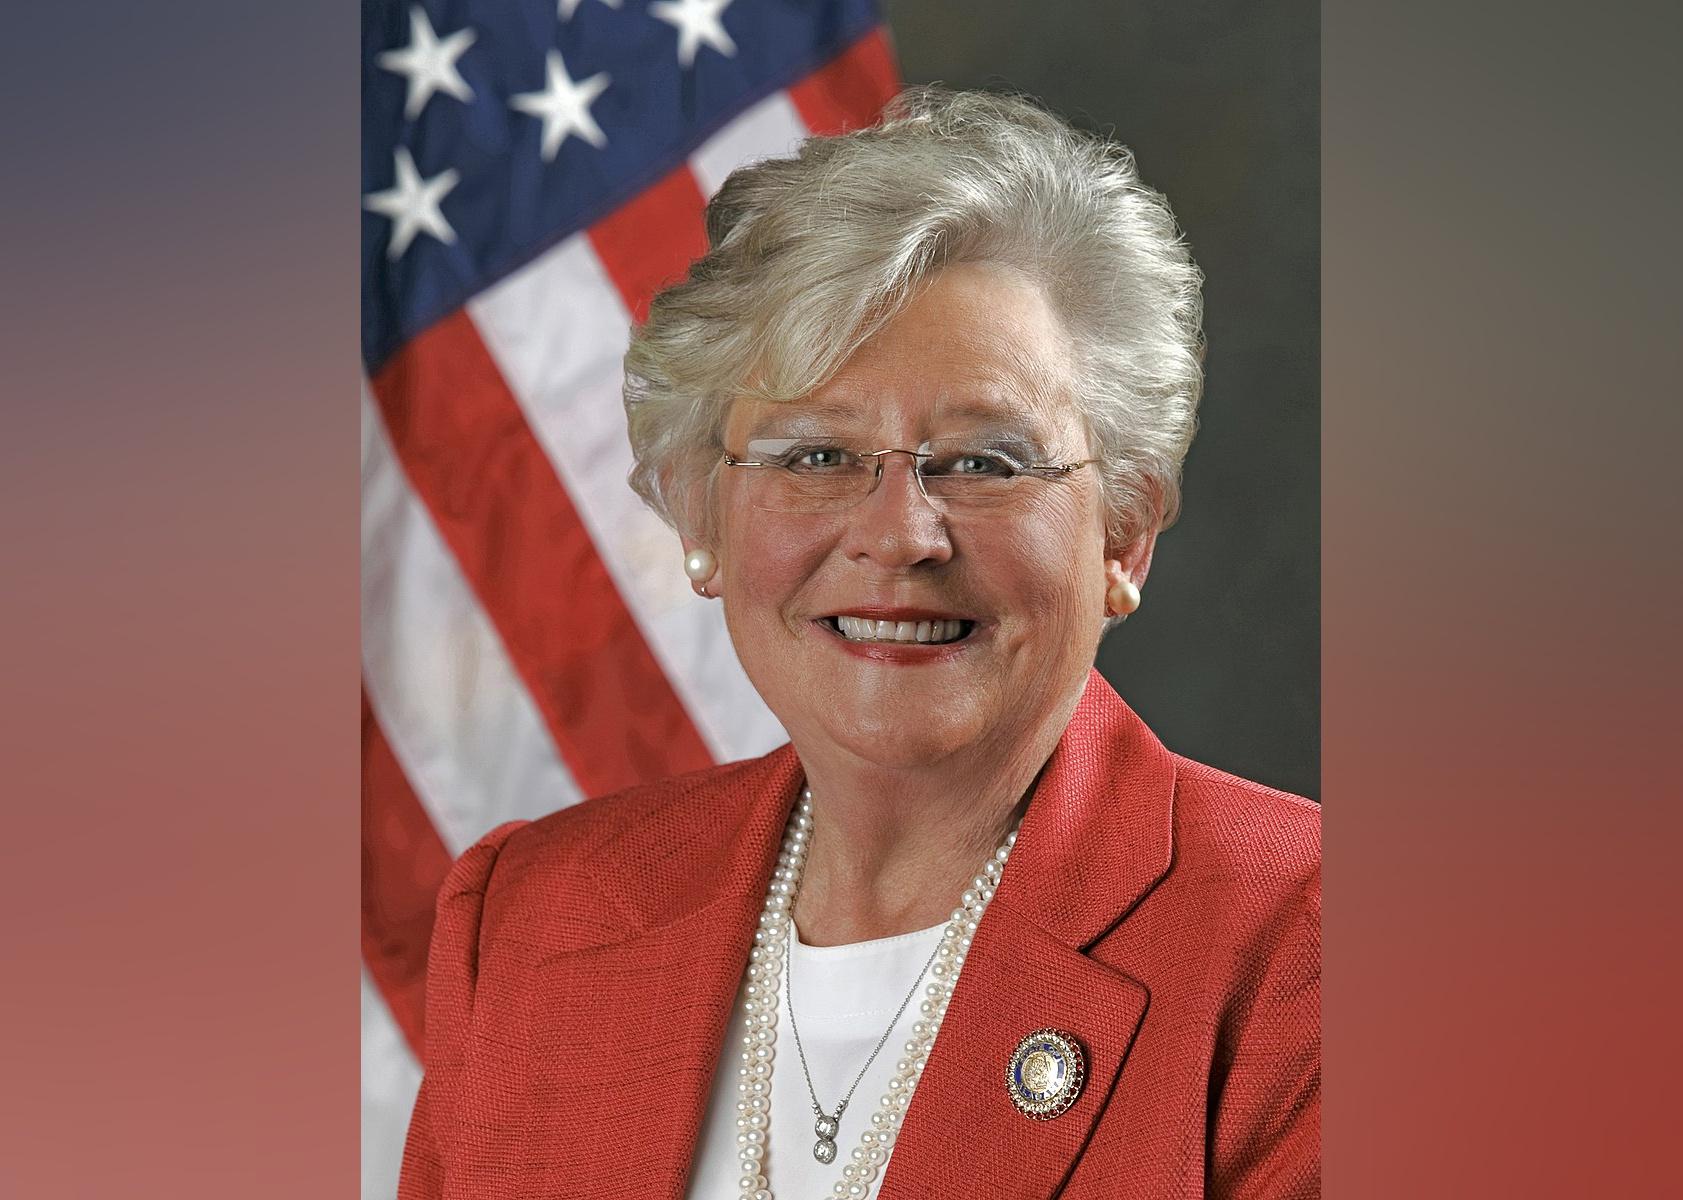 Official photograph of Alabama Lieutenant Governor Kay Ivey